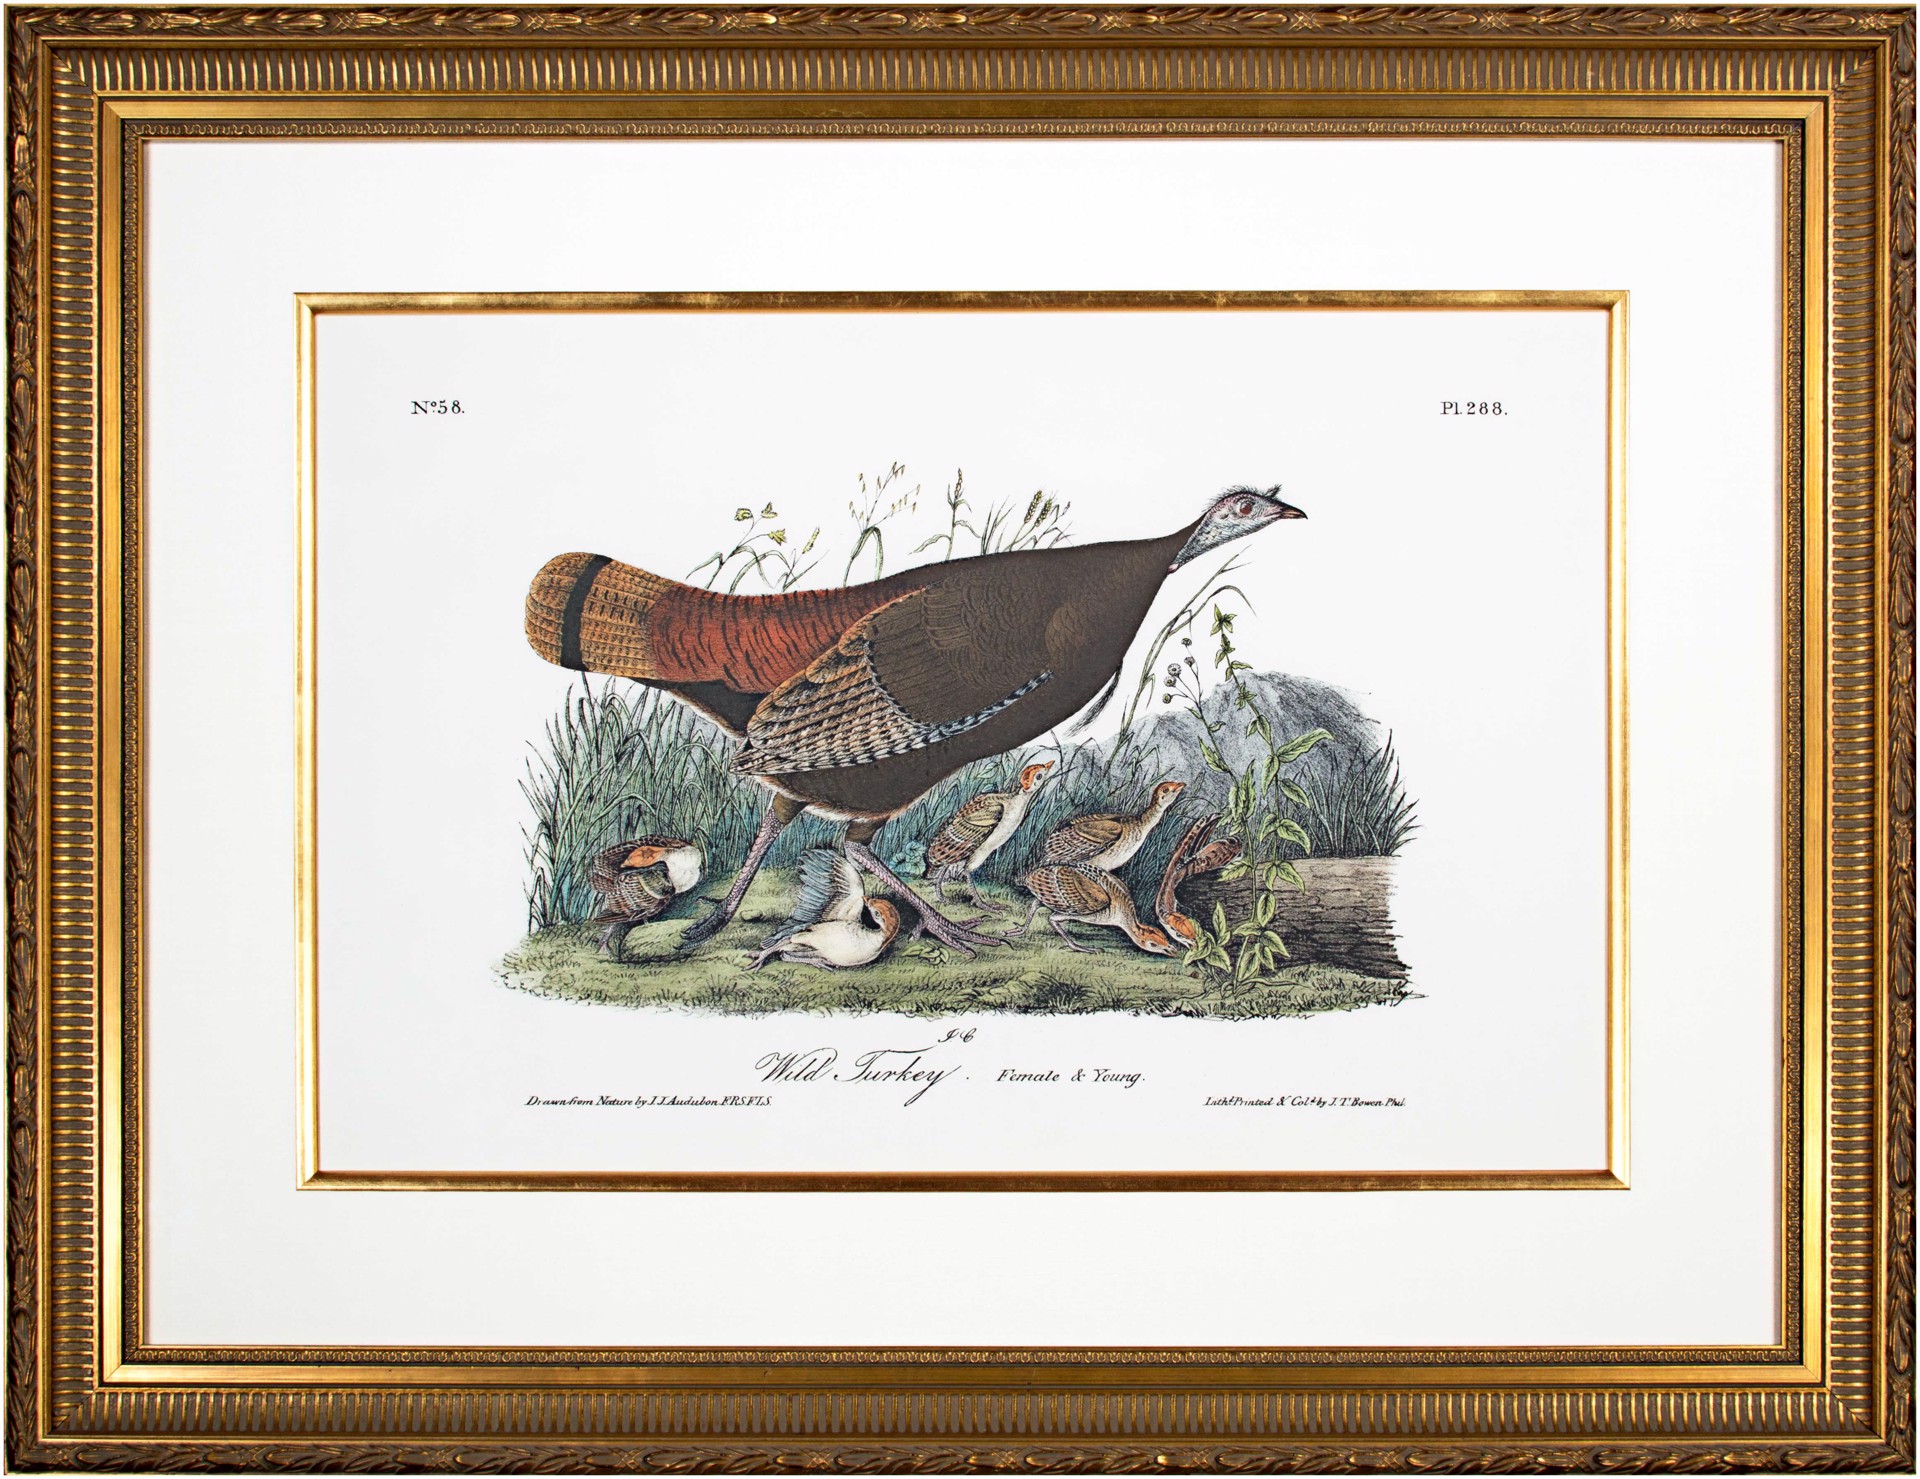 Wild Turkey - Female & Young No. 58 Pl. 288 by John James Audubon